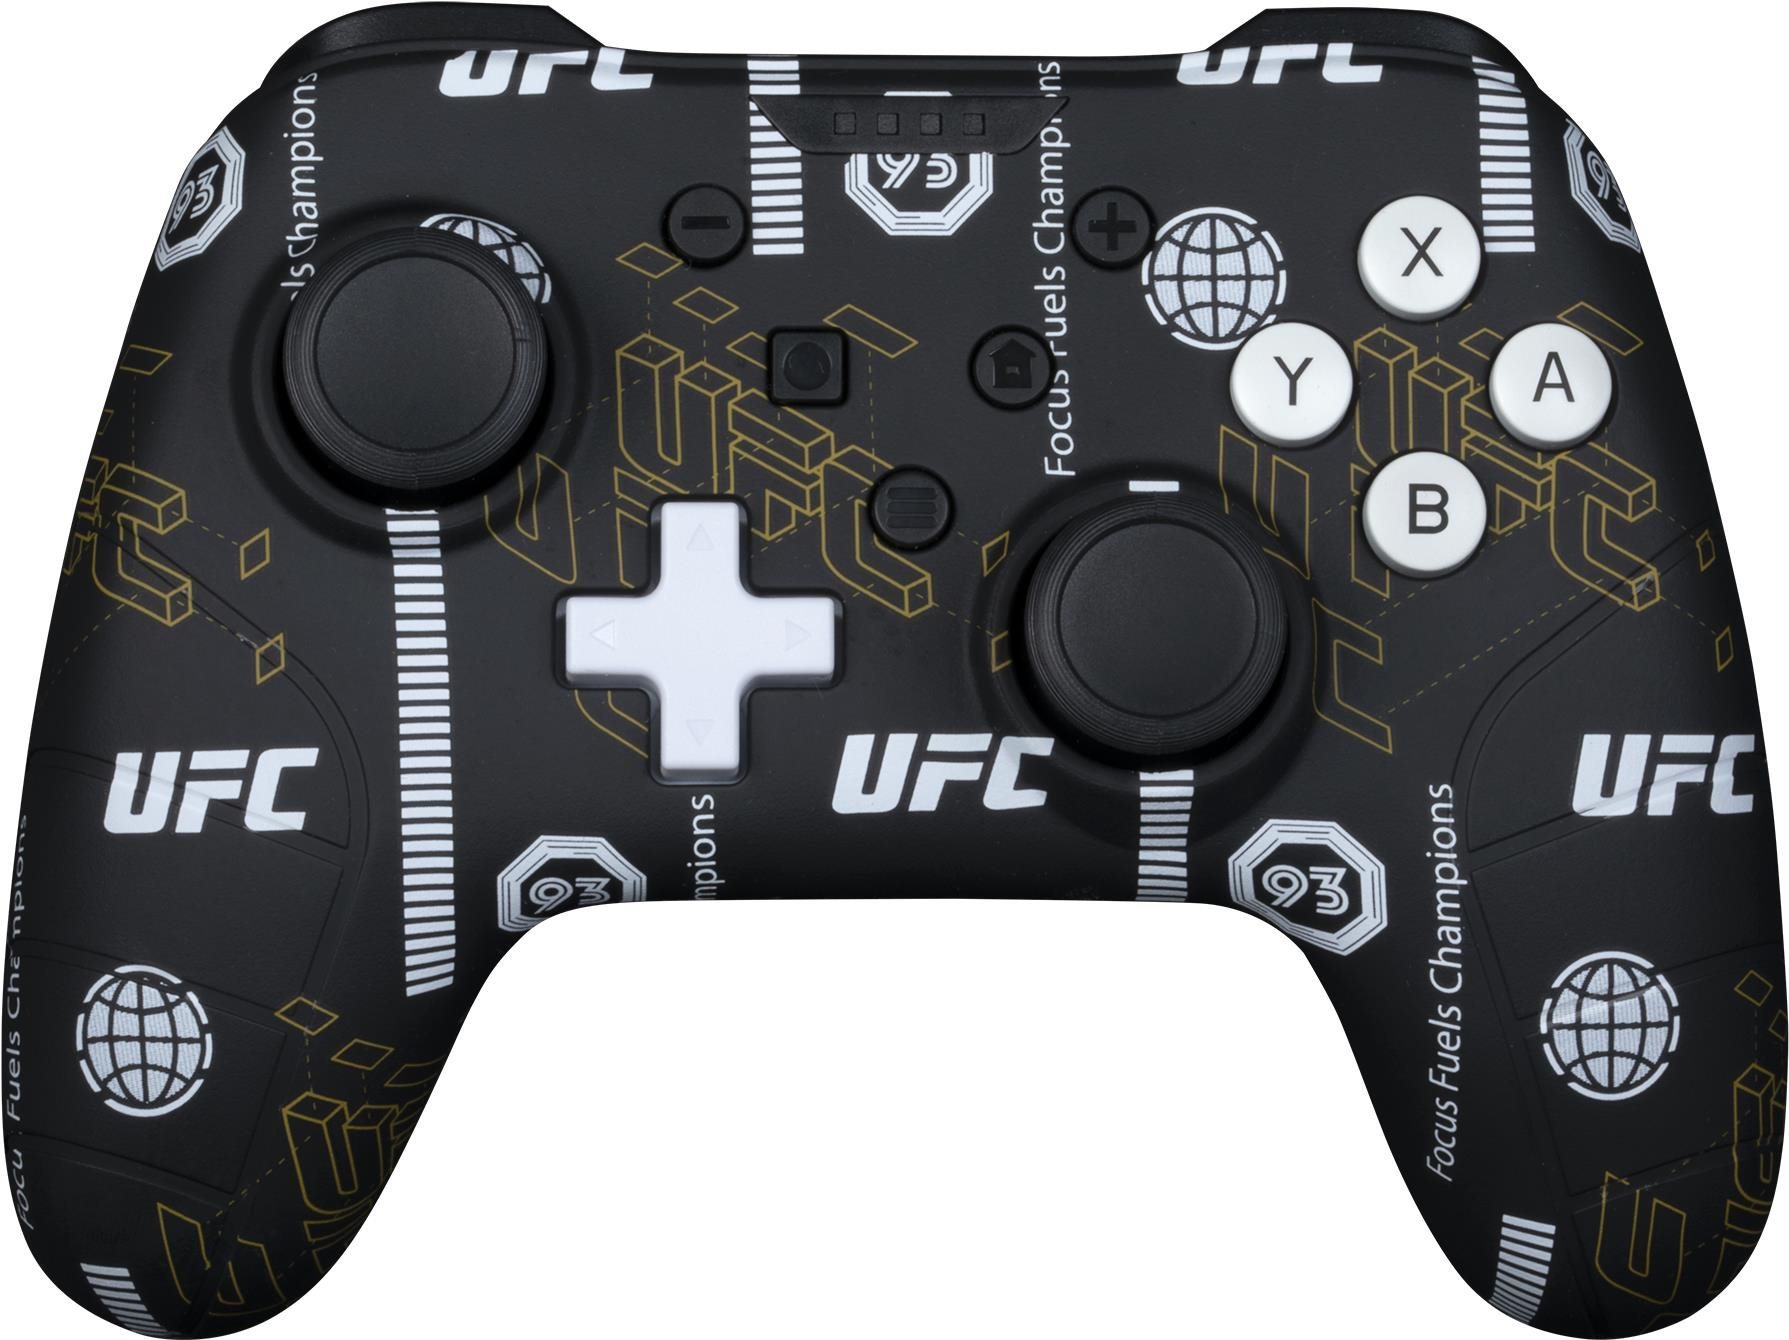 Konix UFC Nintendo Switch/PC Controller